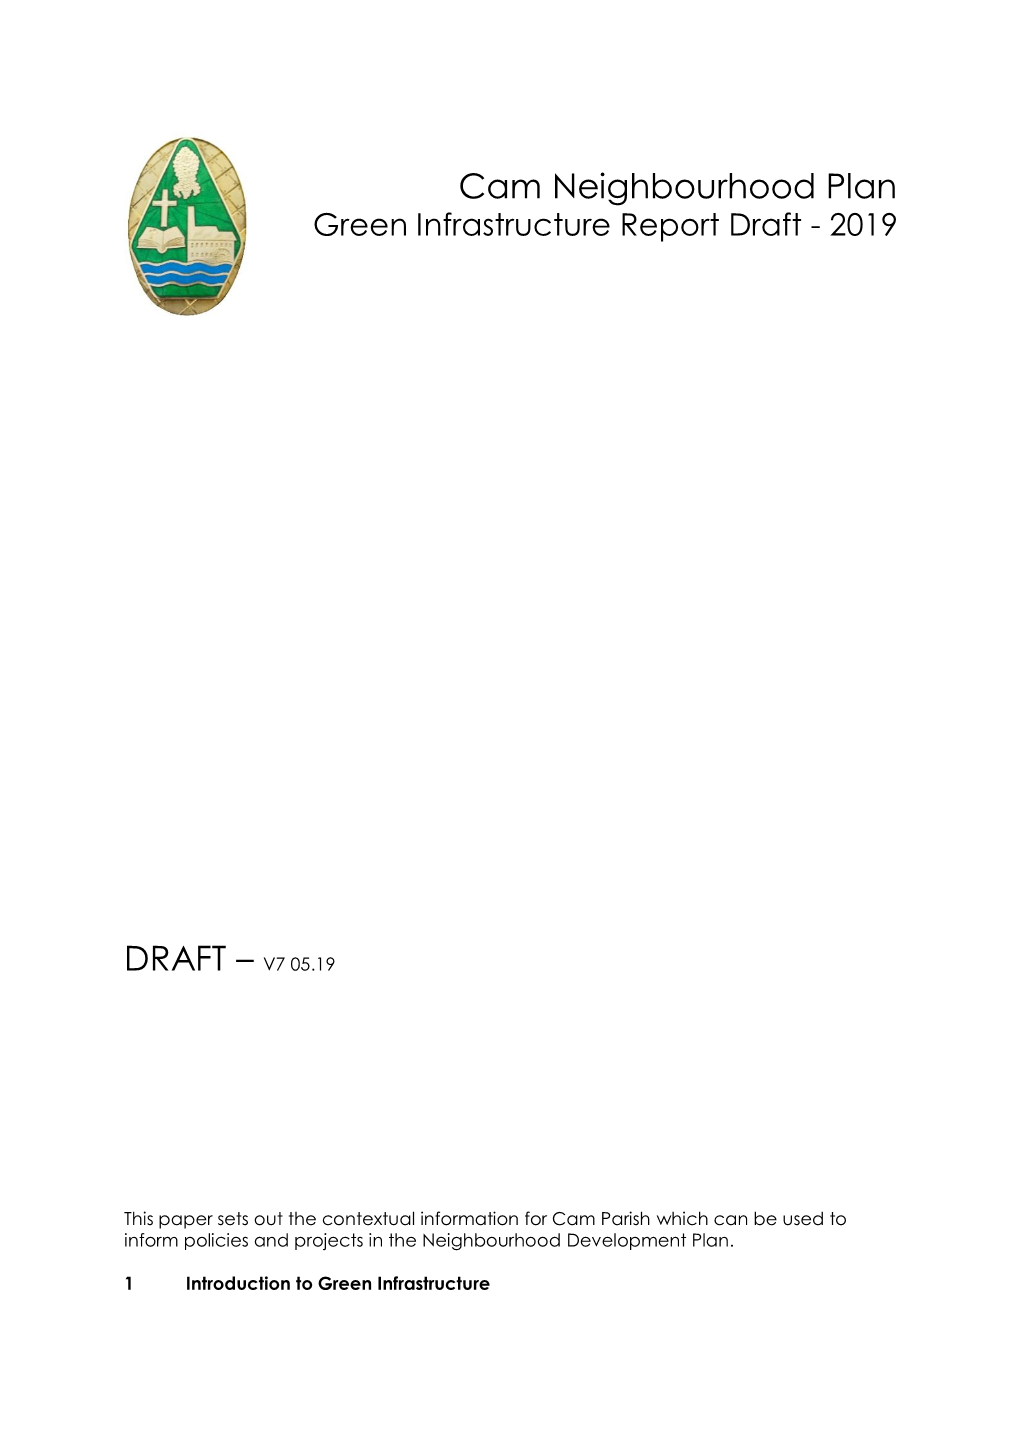 NDP Green Infrastructure Report 2019